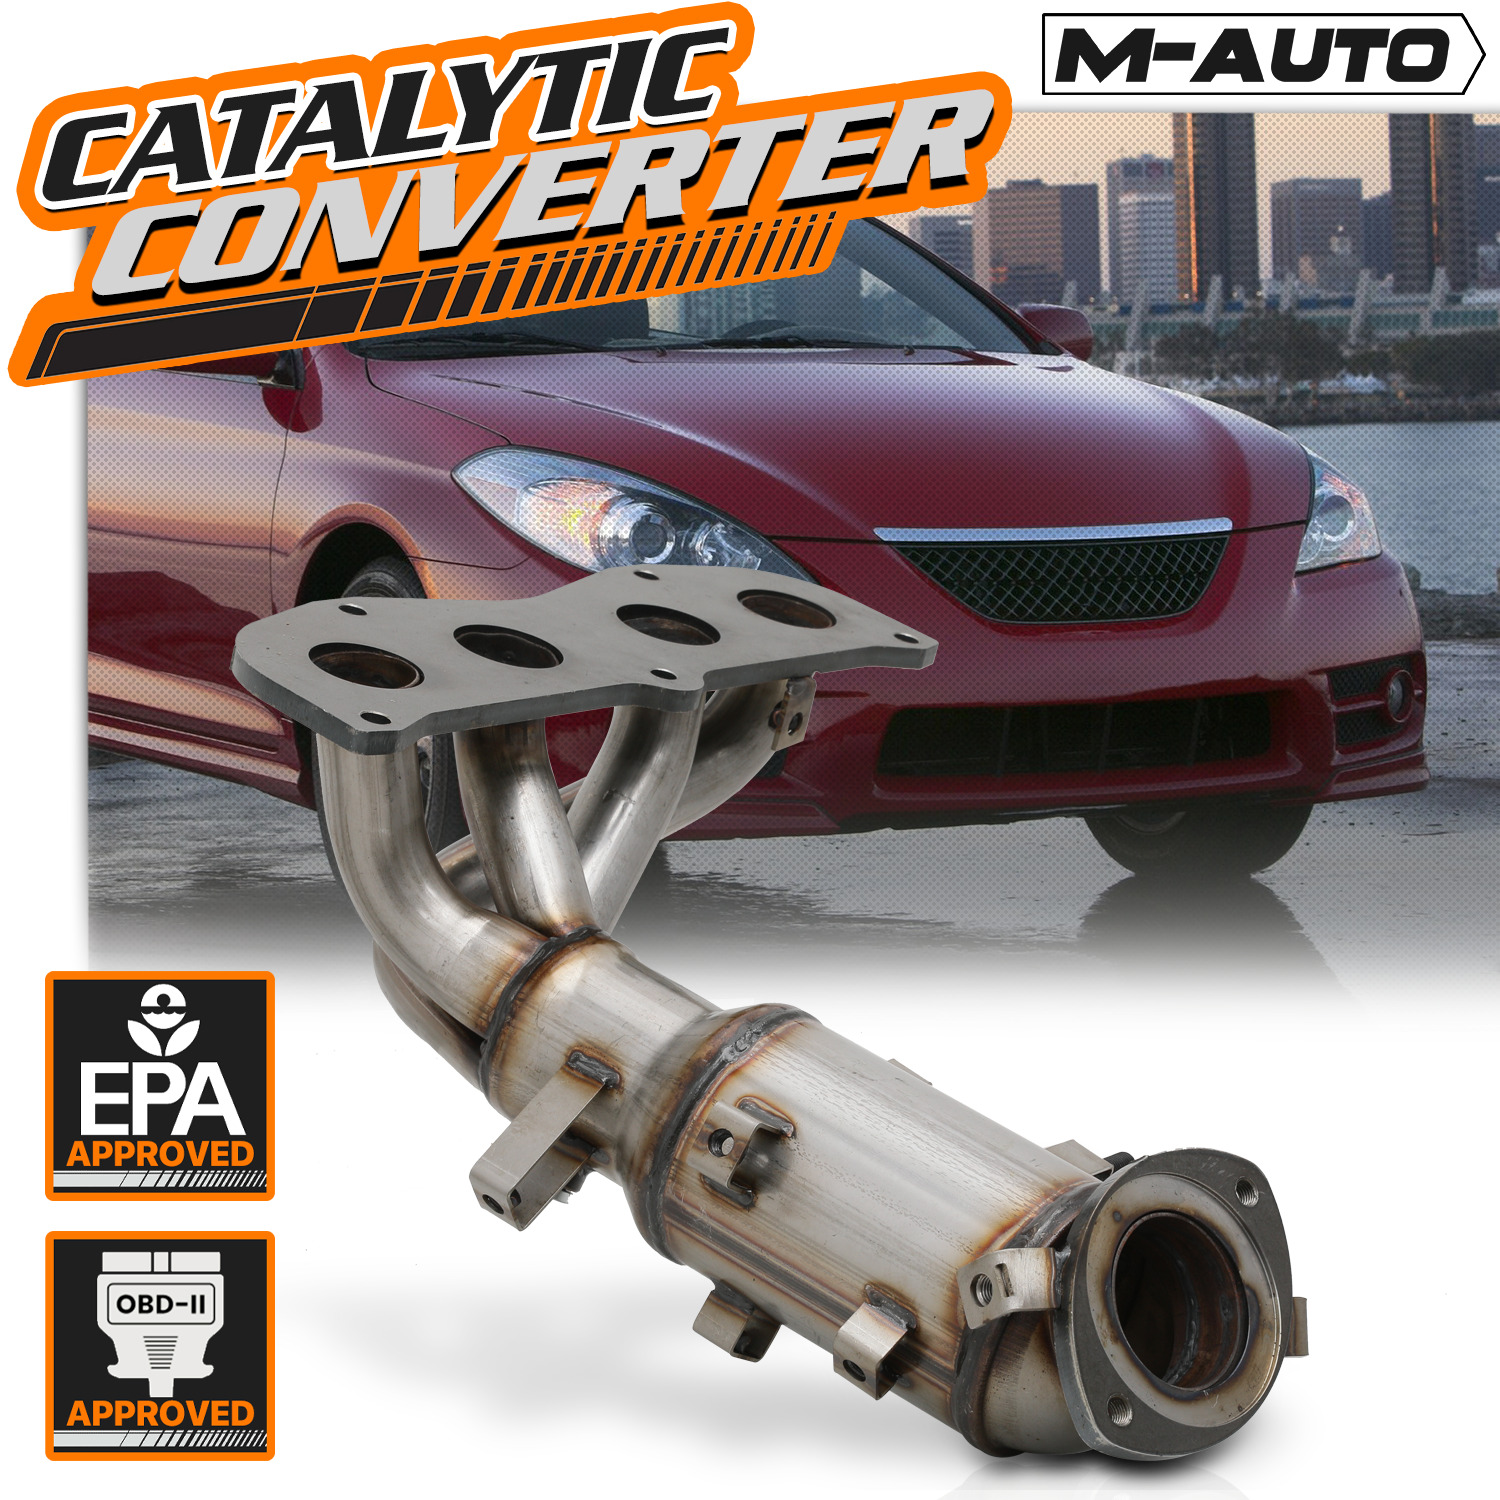 Catalytic Converter Exhaust Header Manifold For 2002-2006 Toyota Camry/Solara